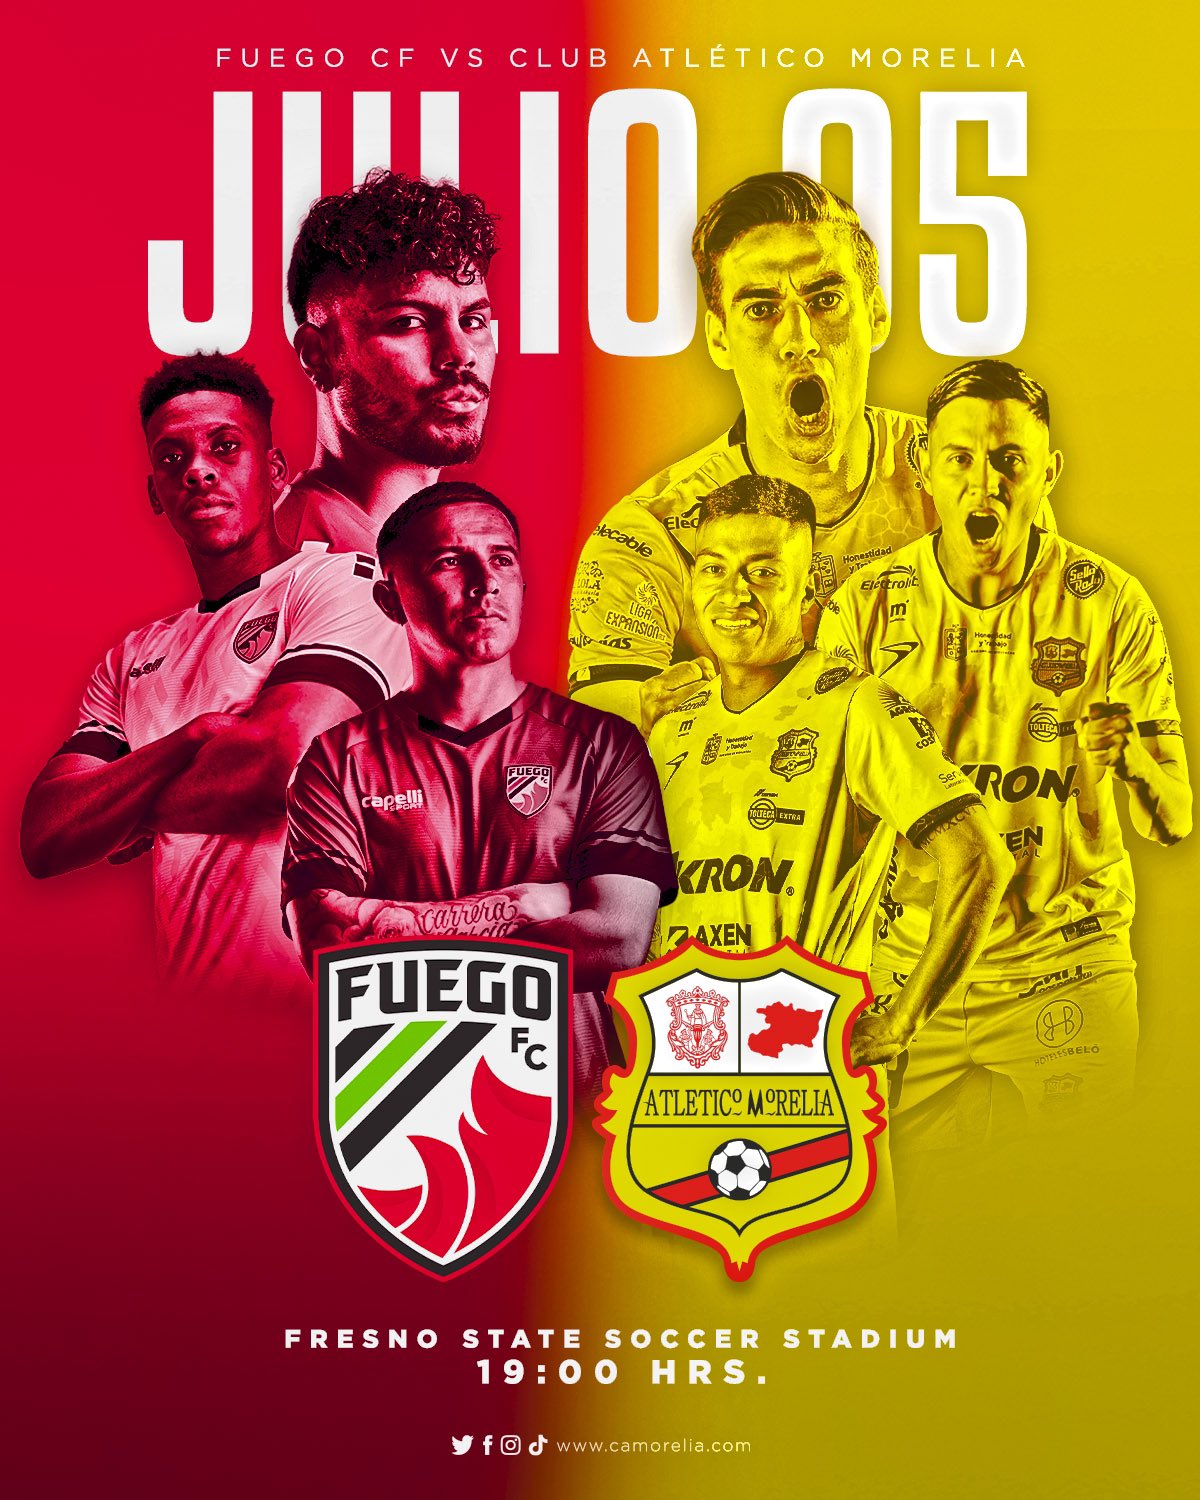 Fuego FC Announces Match Against Atlético Morelia - Central Valley